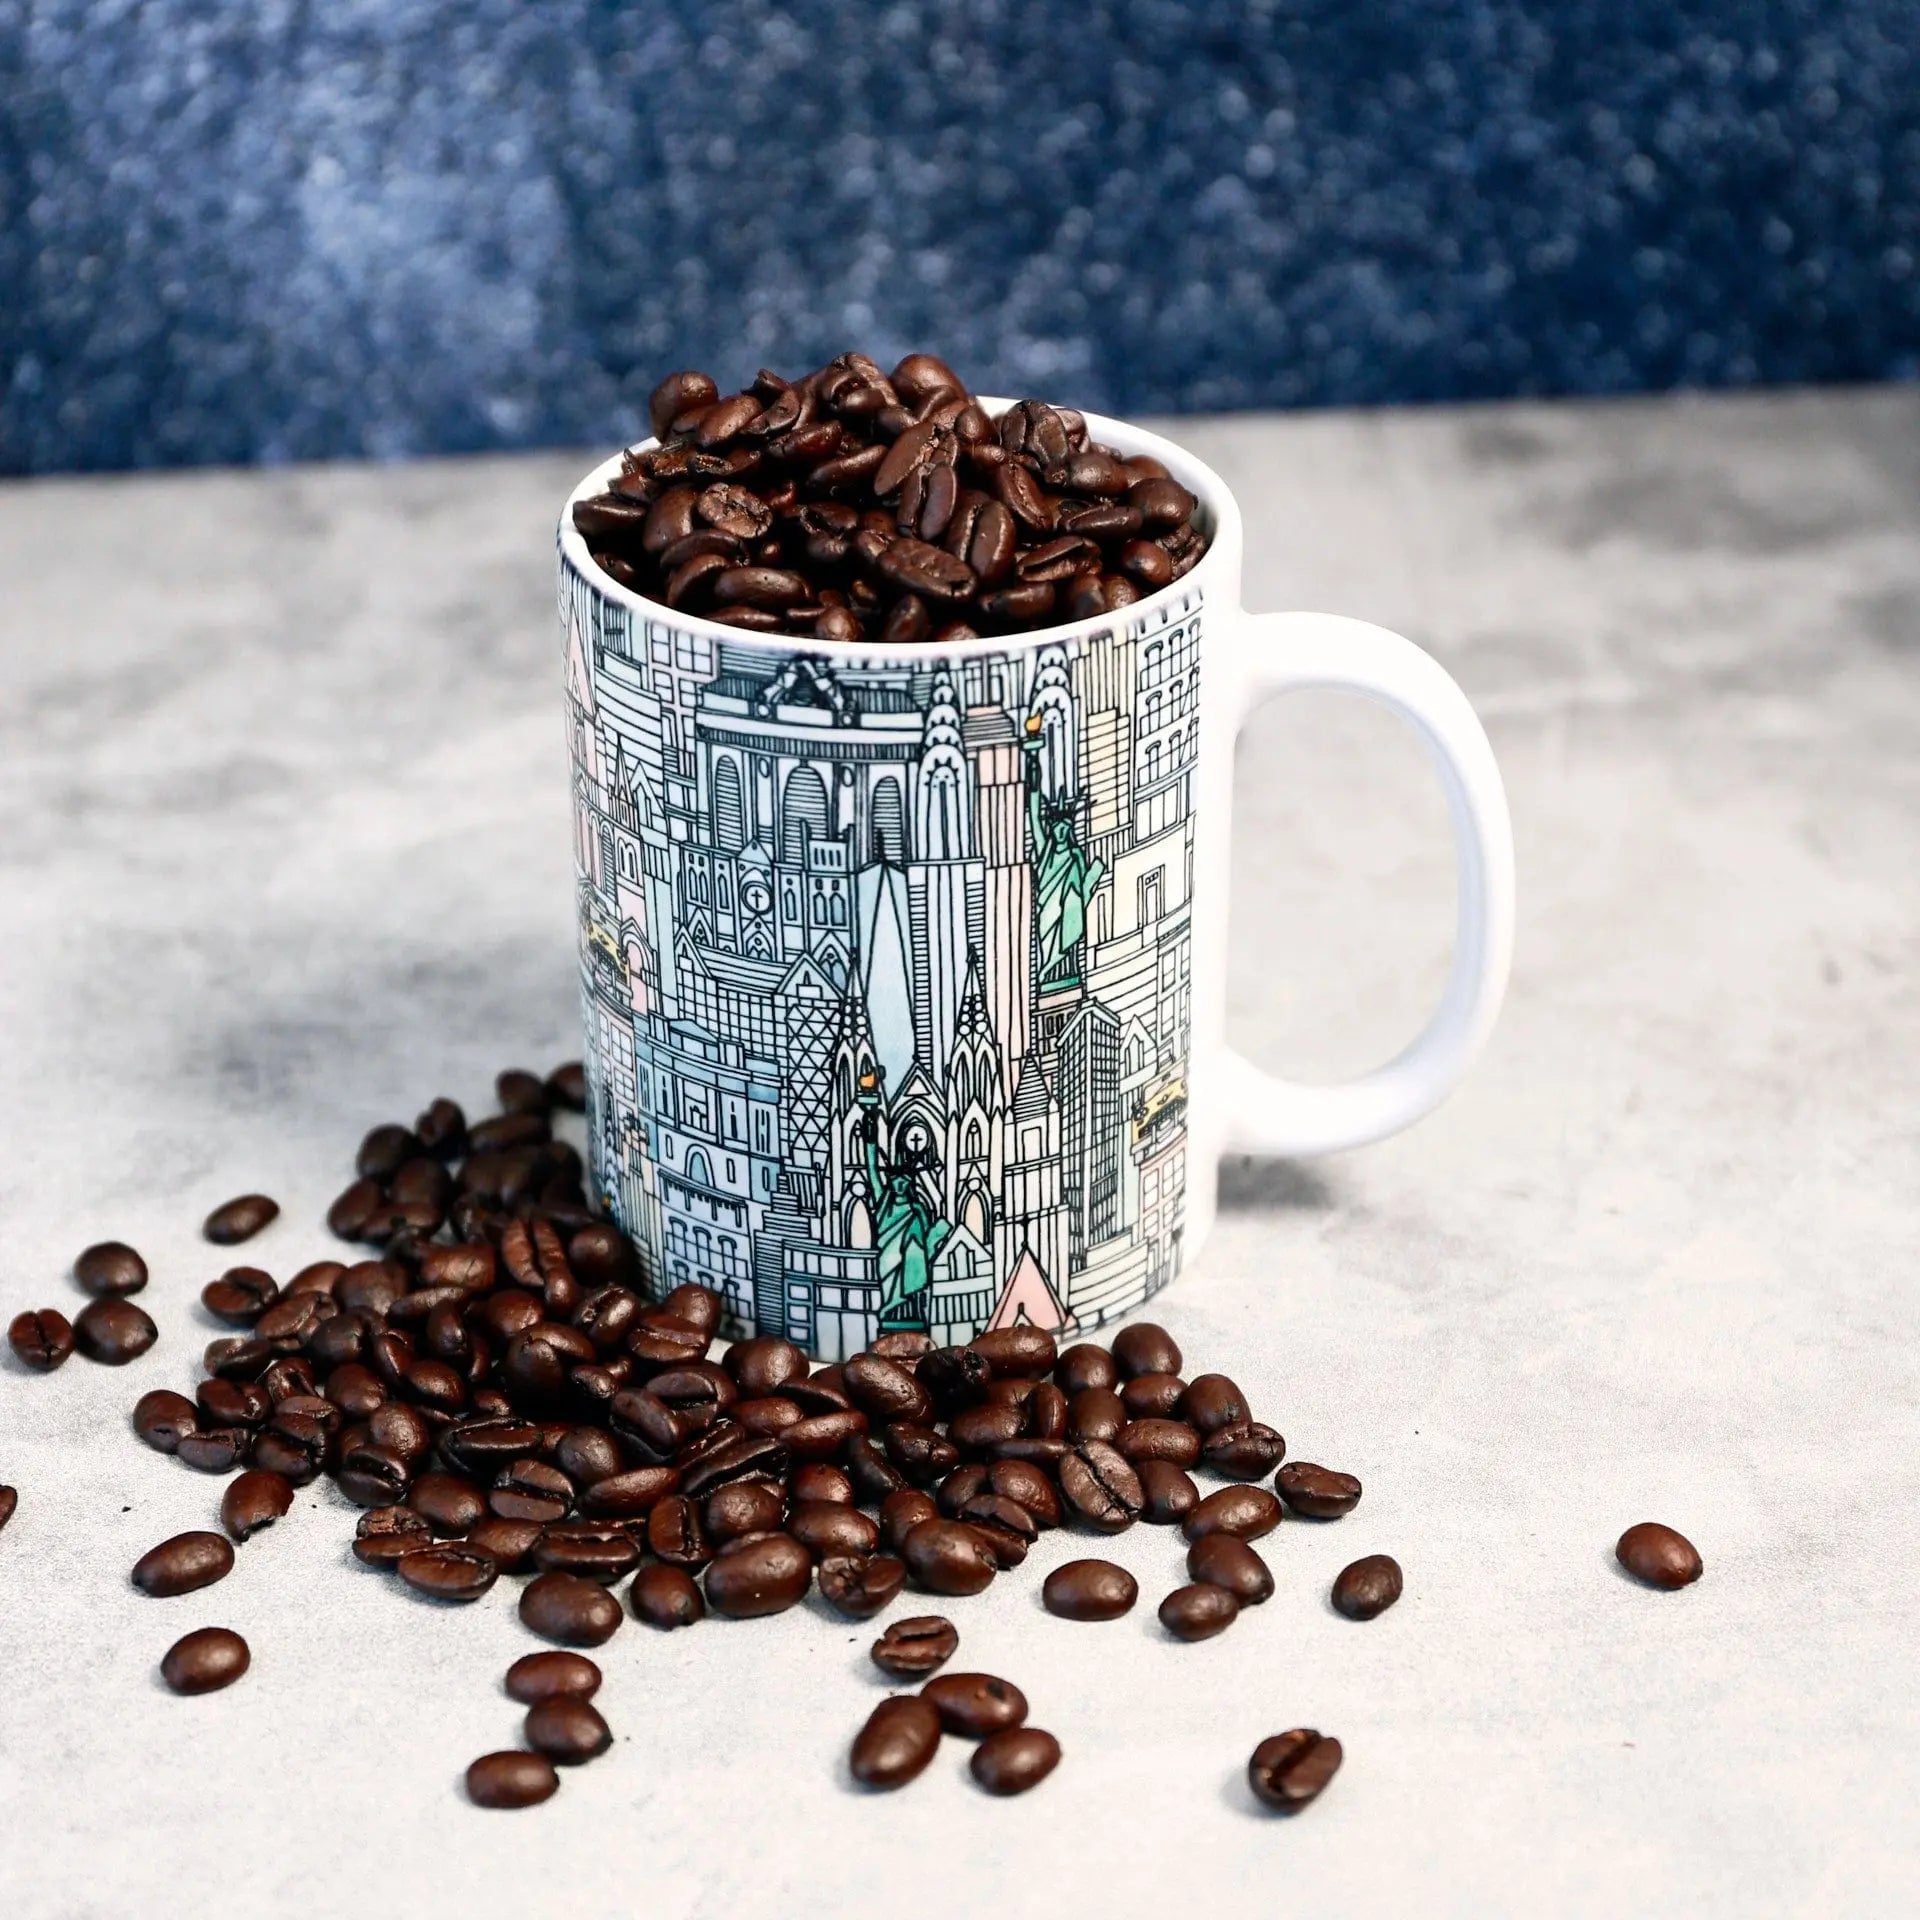 New York Watercolor Coffee Mug